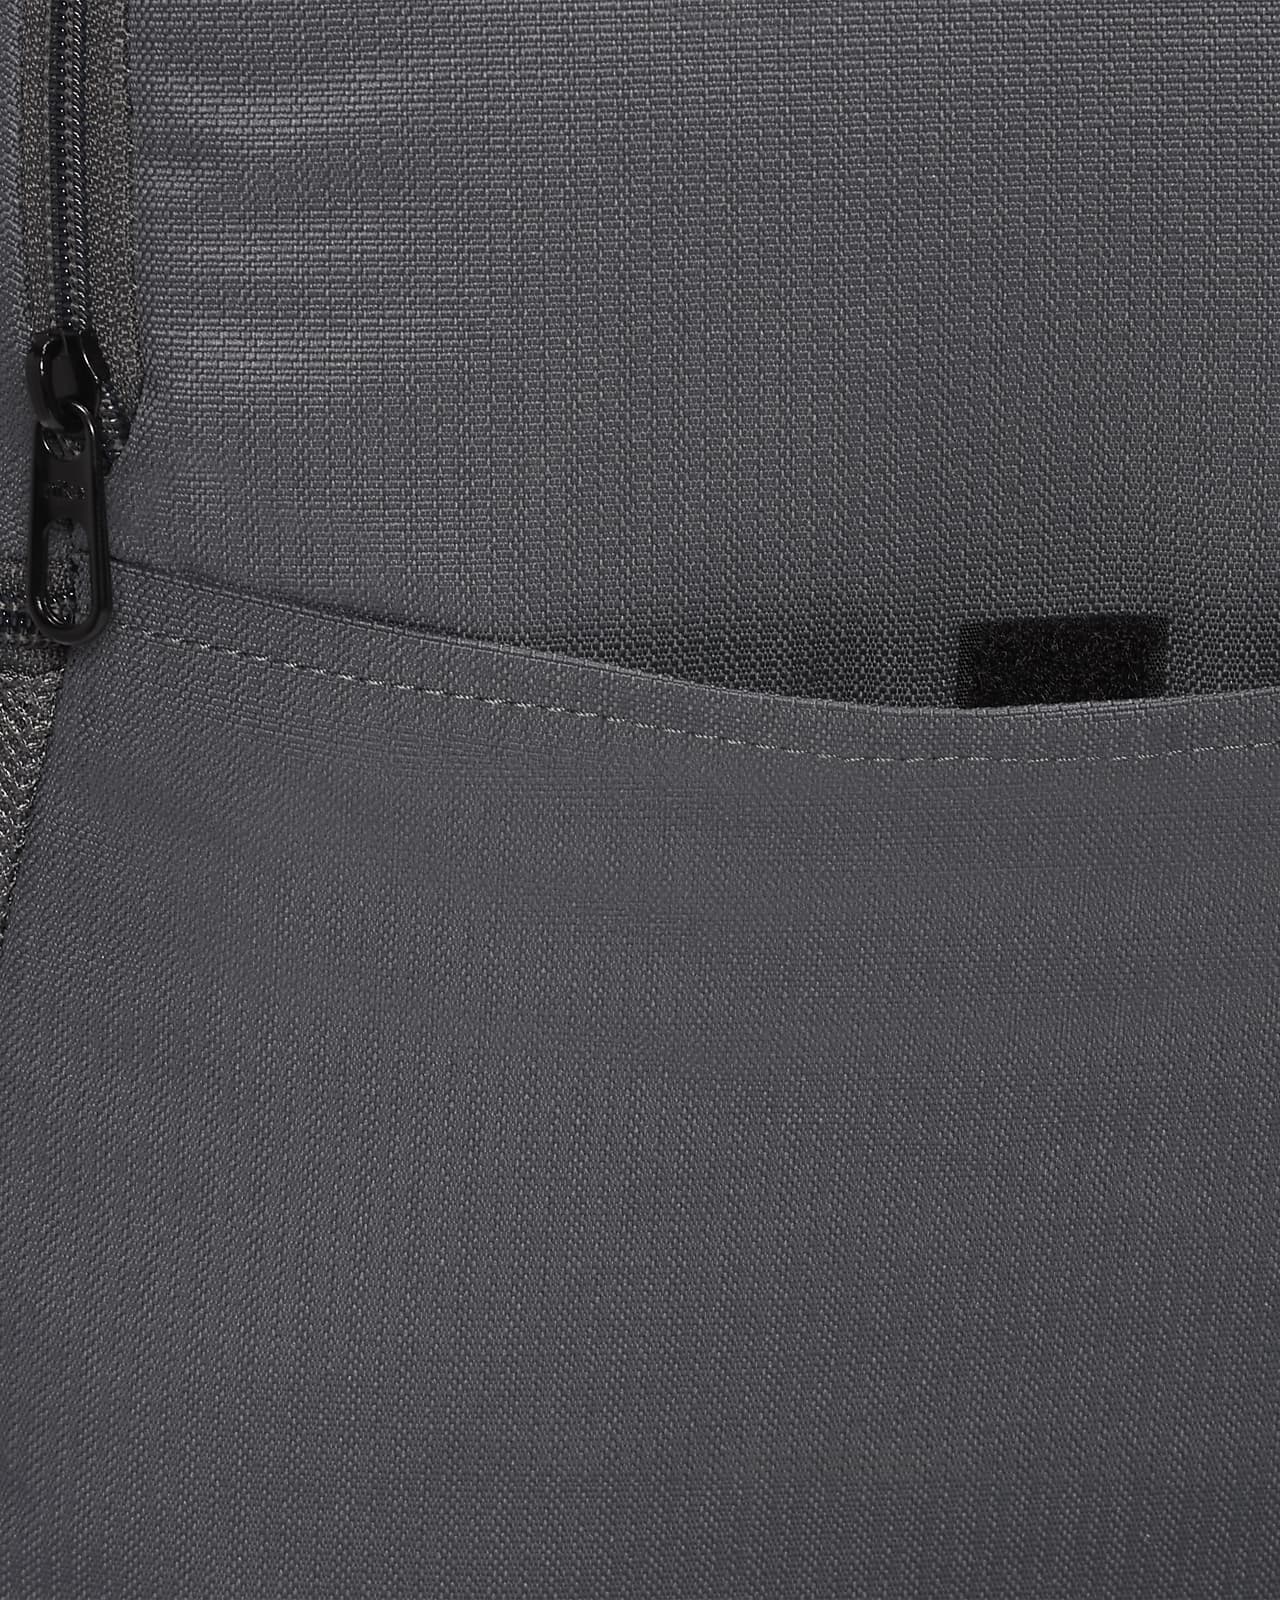 Buy Nike Navy Brasilia 9.5 Training Backpack (Medium, 24L) from Next  Luxembourg